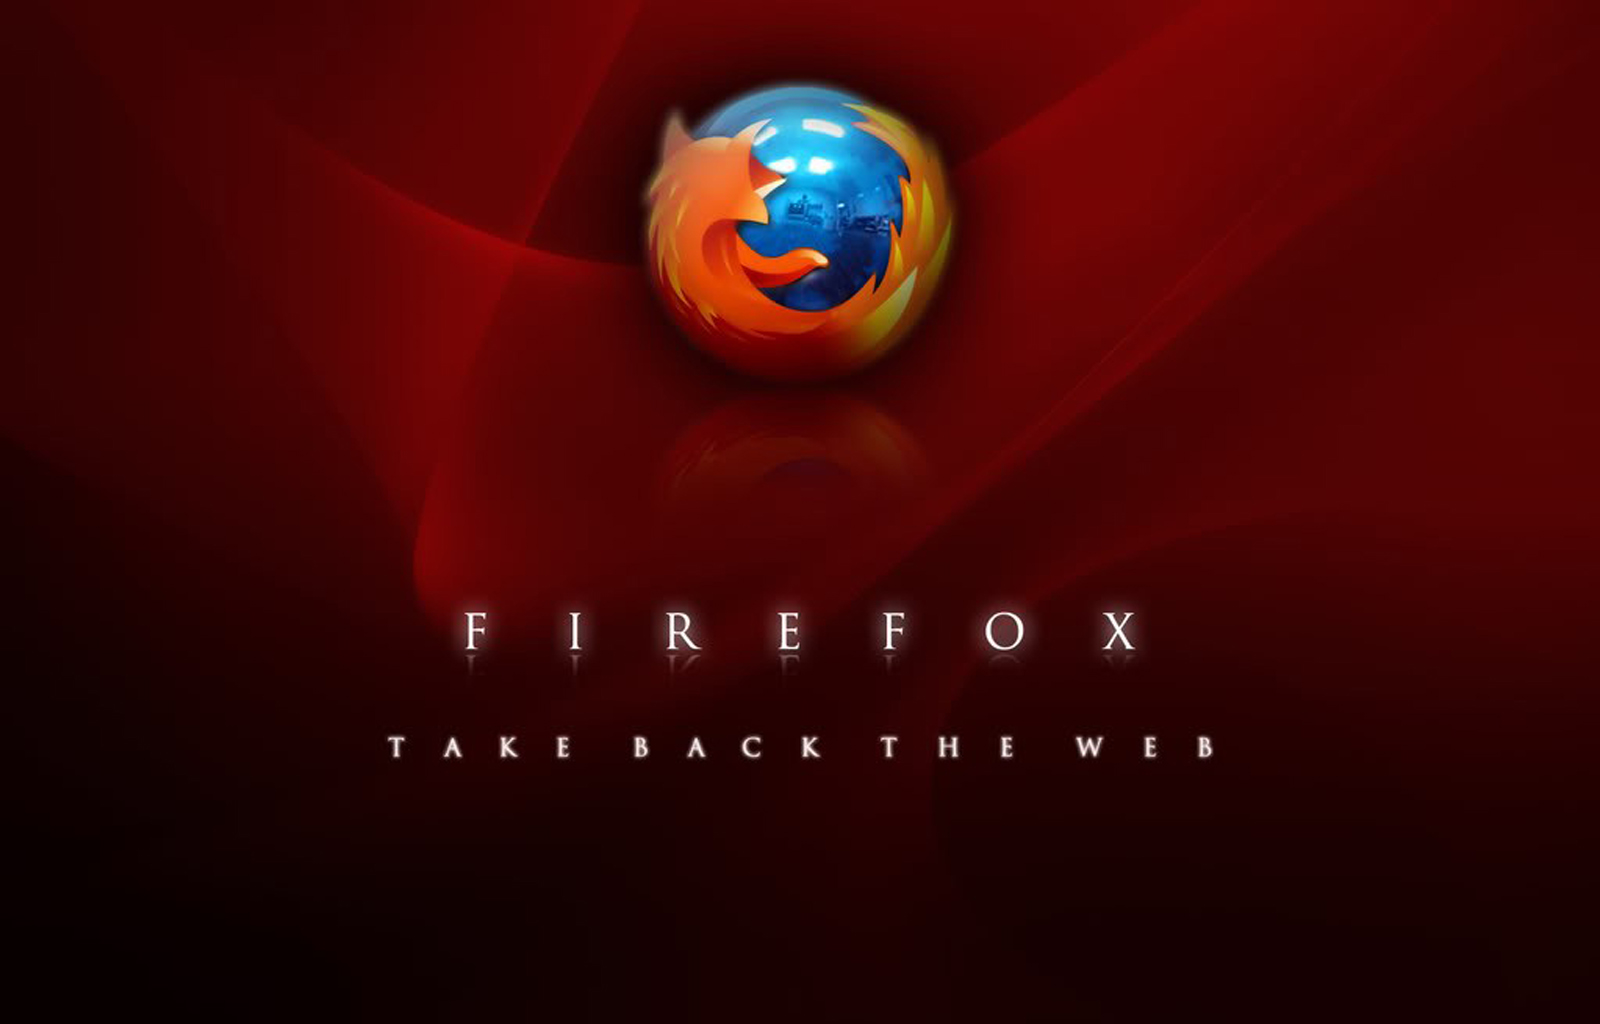 Firefox HD Wallpaper Mozilla Background